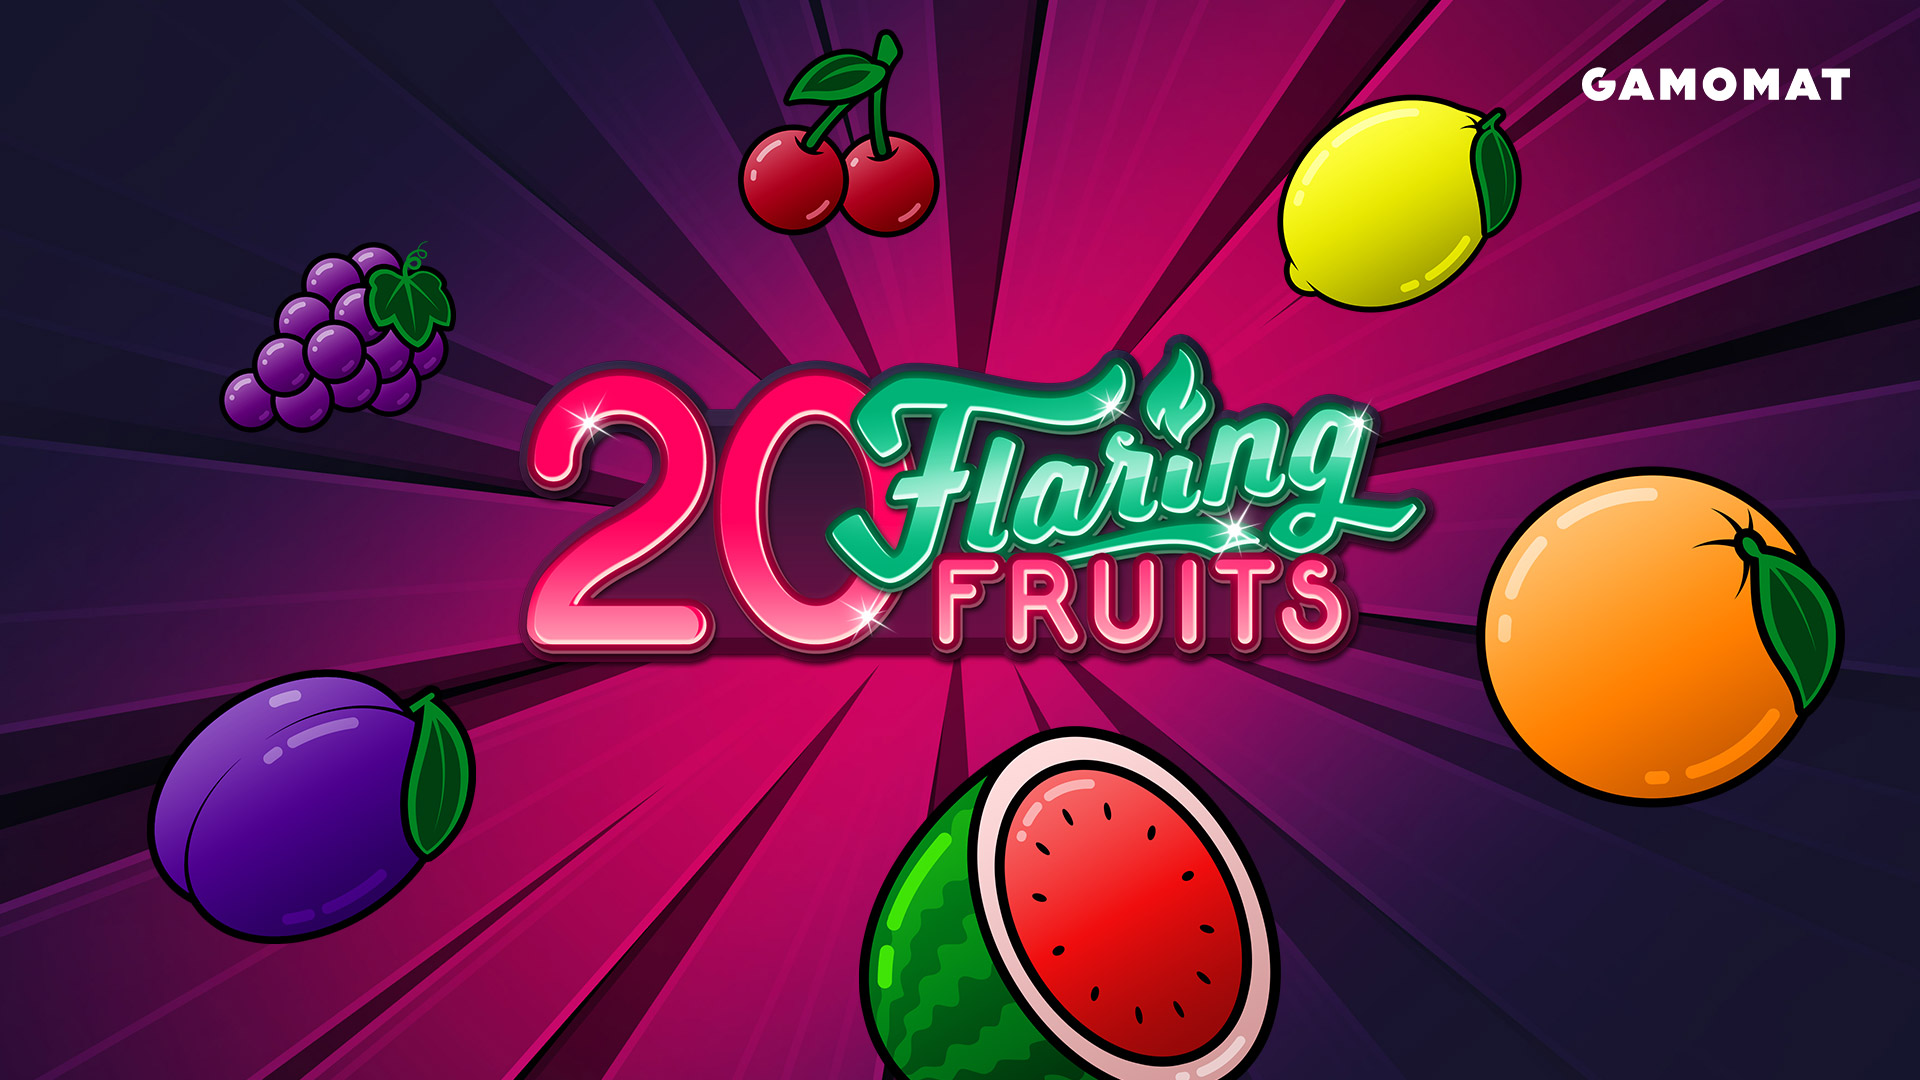 GAMOMATâs 20 Flaring Fruits is now live